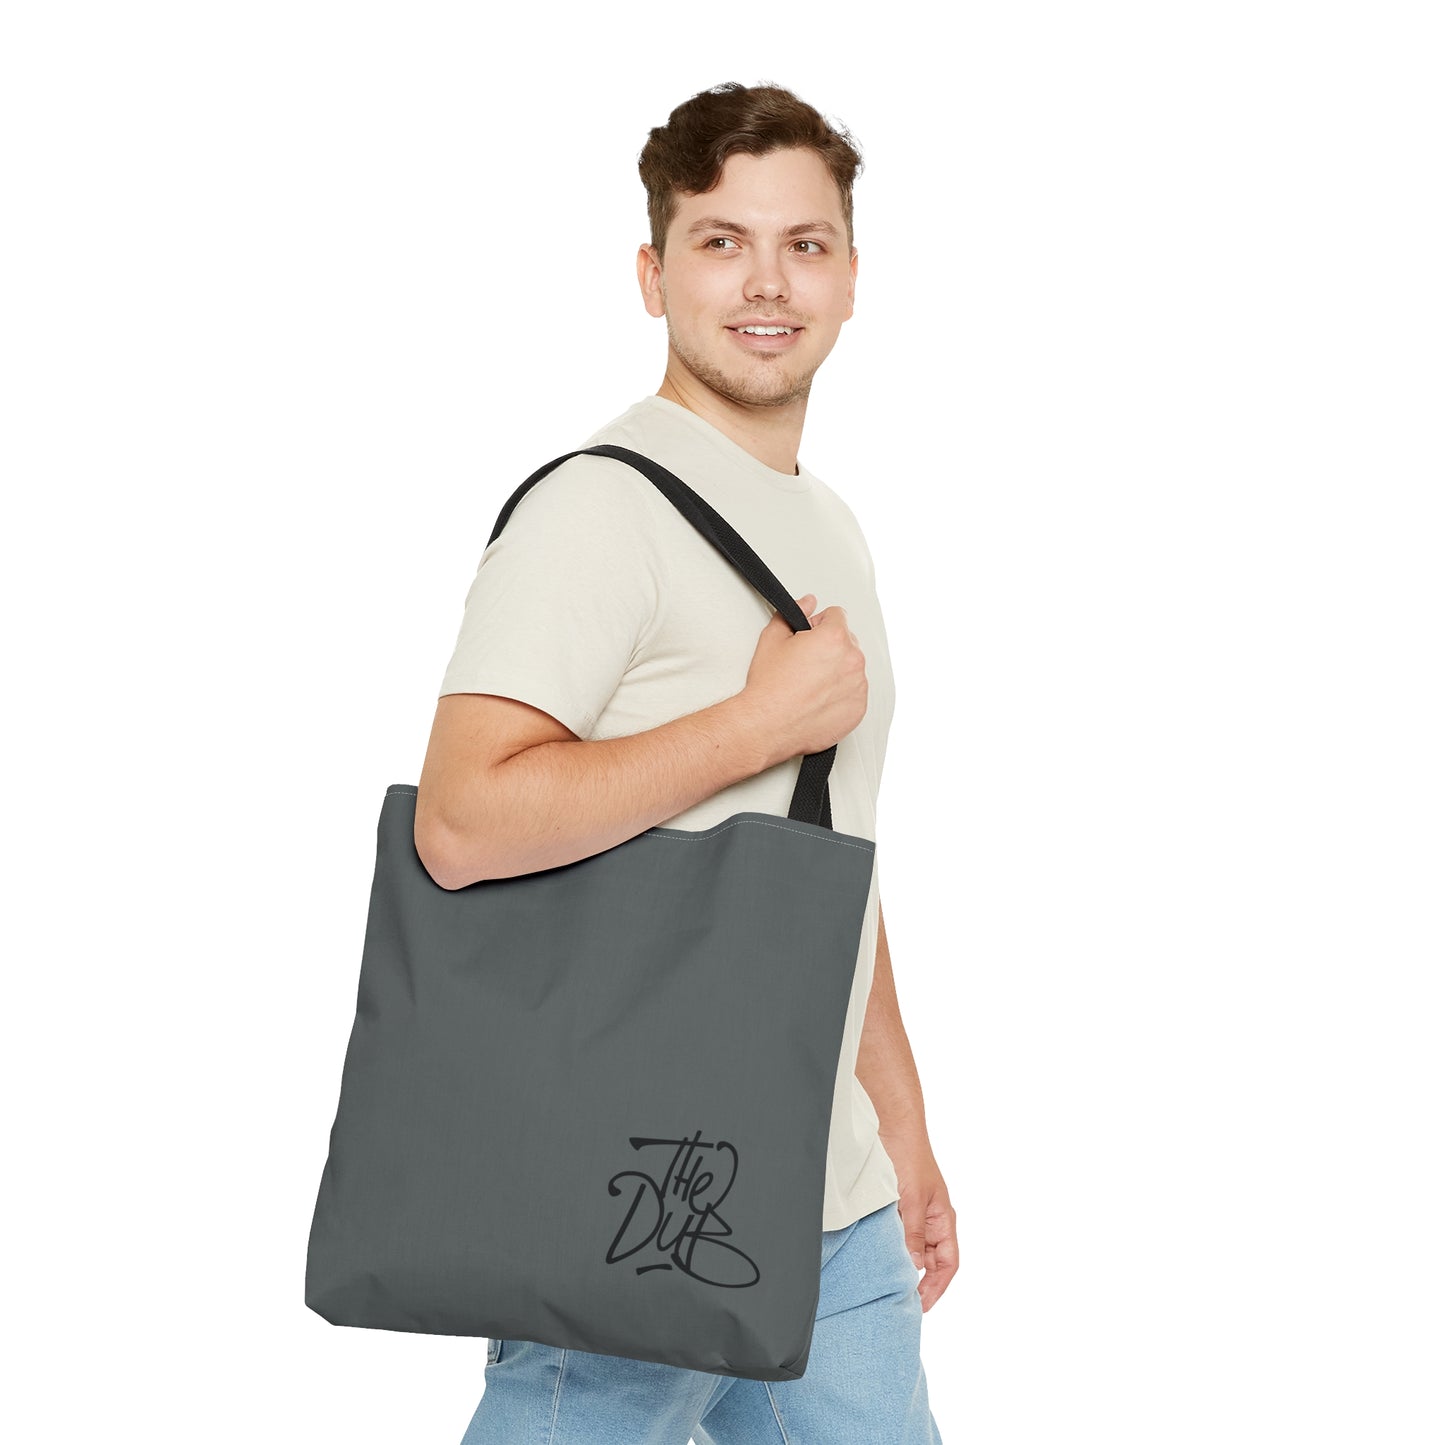 DubPDXGear - Dark Gray DubSac Tote Bag